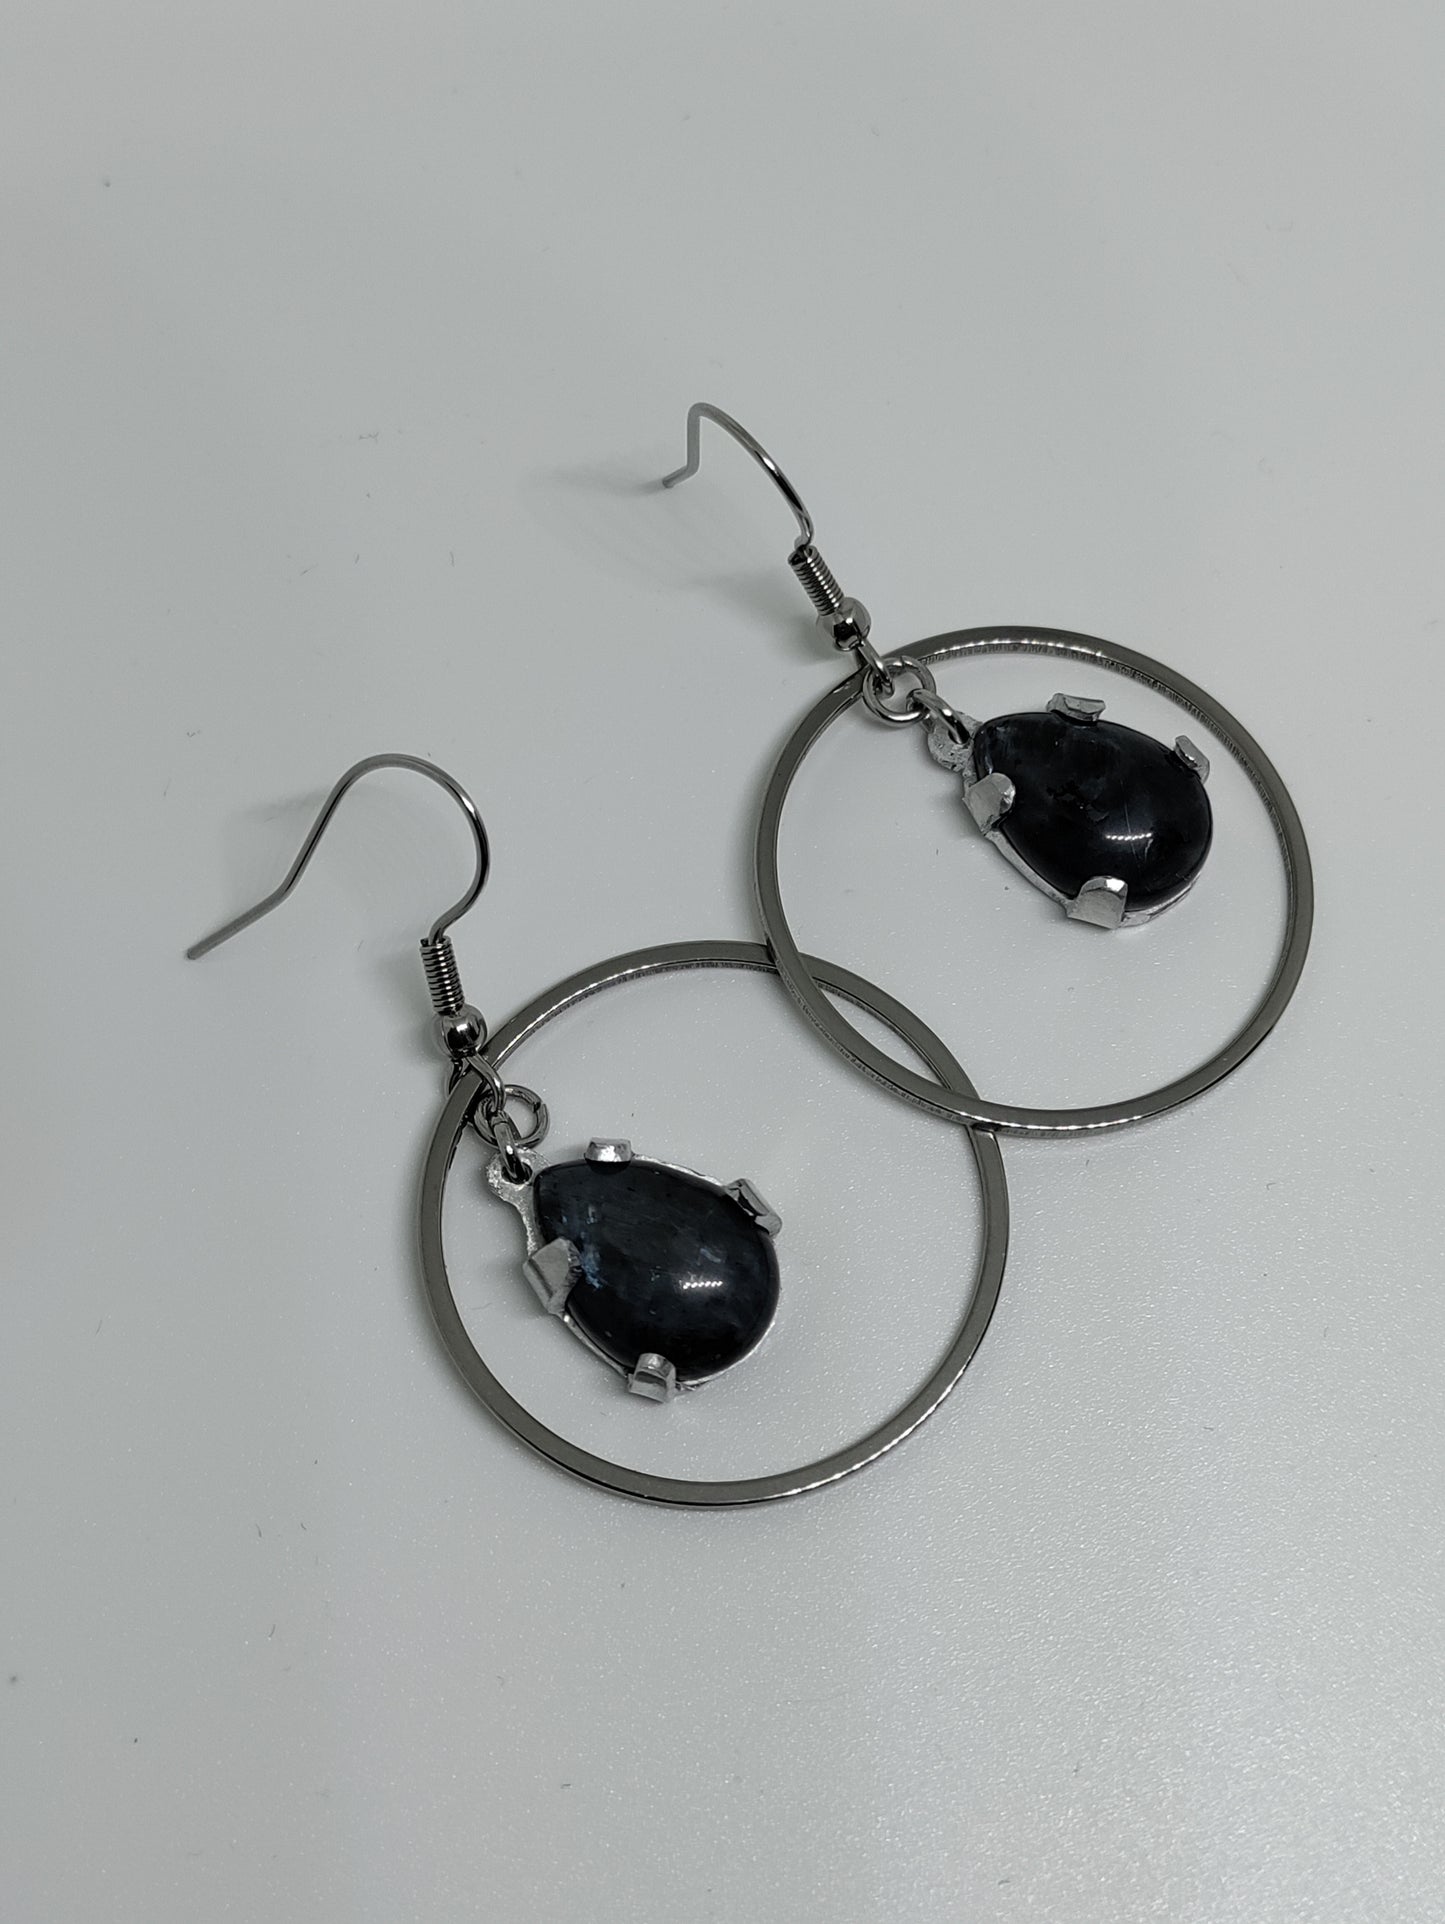 Hoop earrings with natural drop labradorite stones LEIA&CO